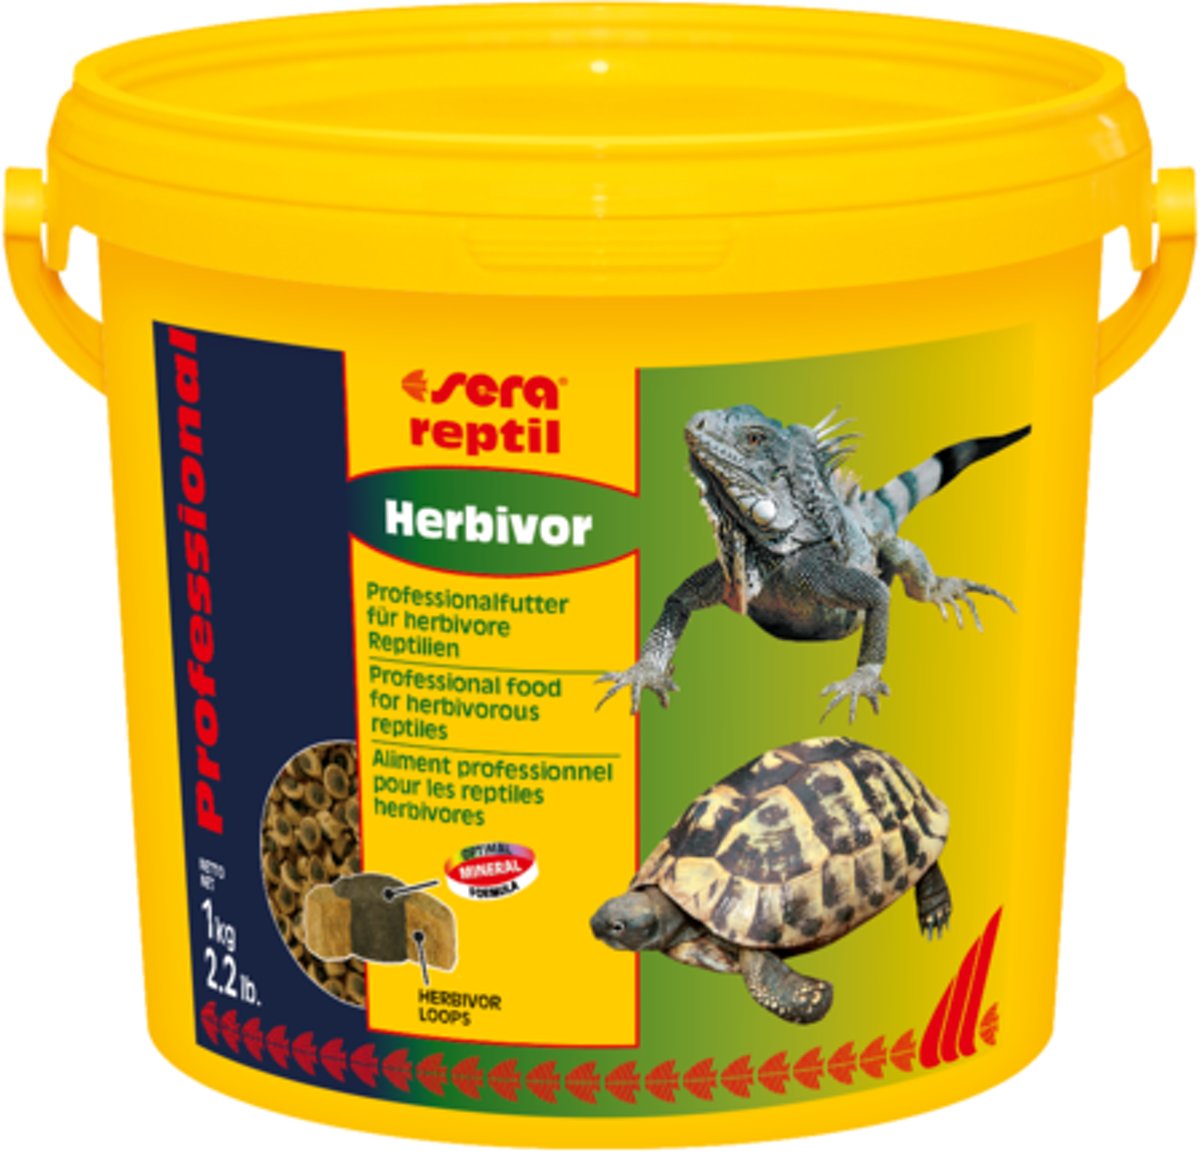 Sera Reptiel proffesional herbivor 3800ml schildpadvoer leguaan